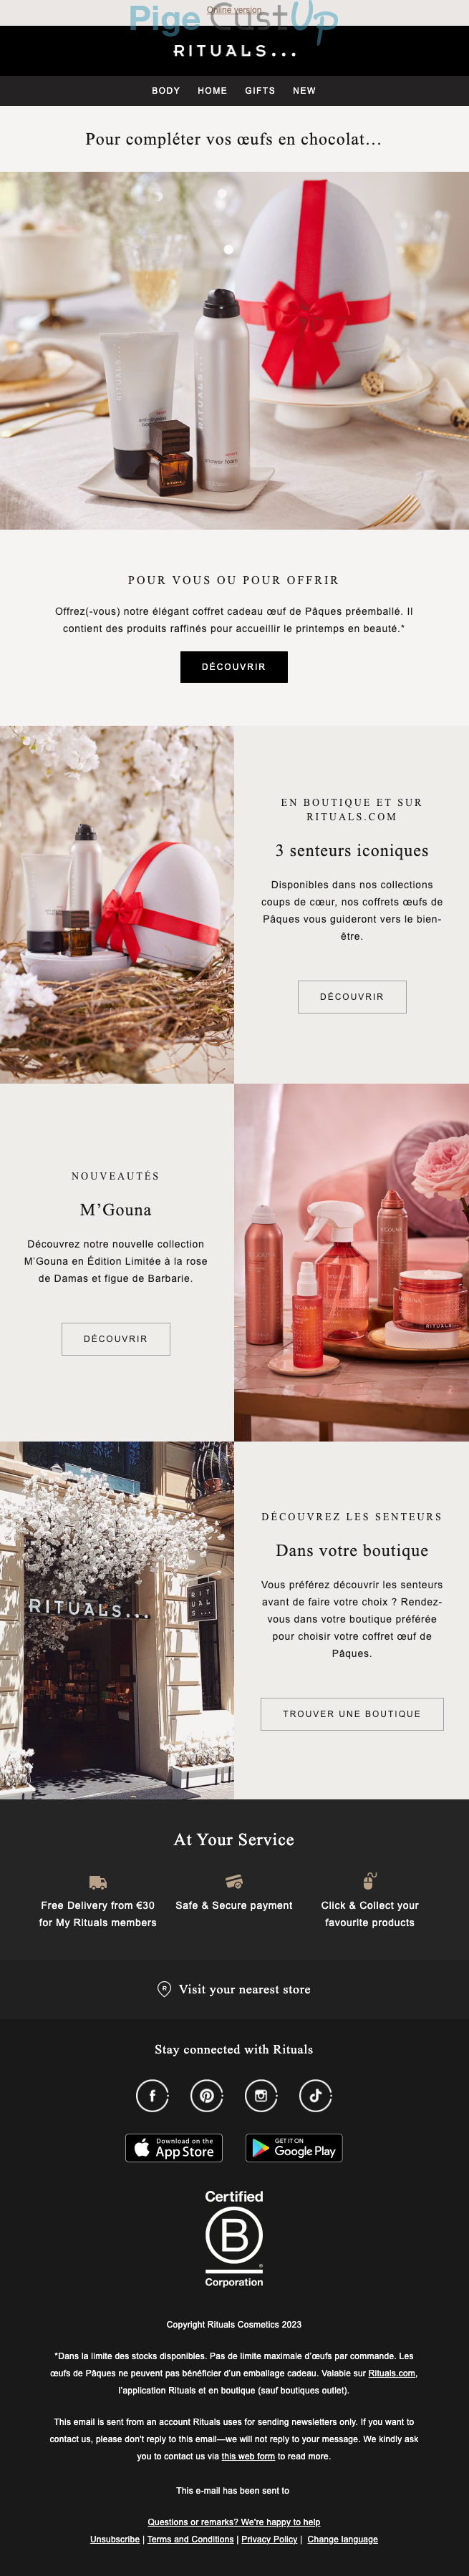 Exemple de Type de media  e-mailing - Rituals Cosmetics - Marketing relationnel - Calendaire (Noël, St valentin, Vœux, …)